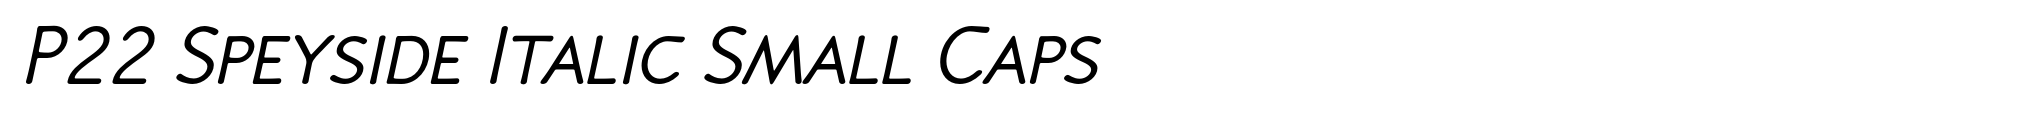 P22 Speyside Italic Small Caps image